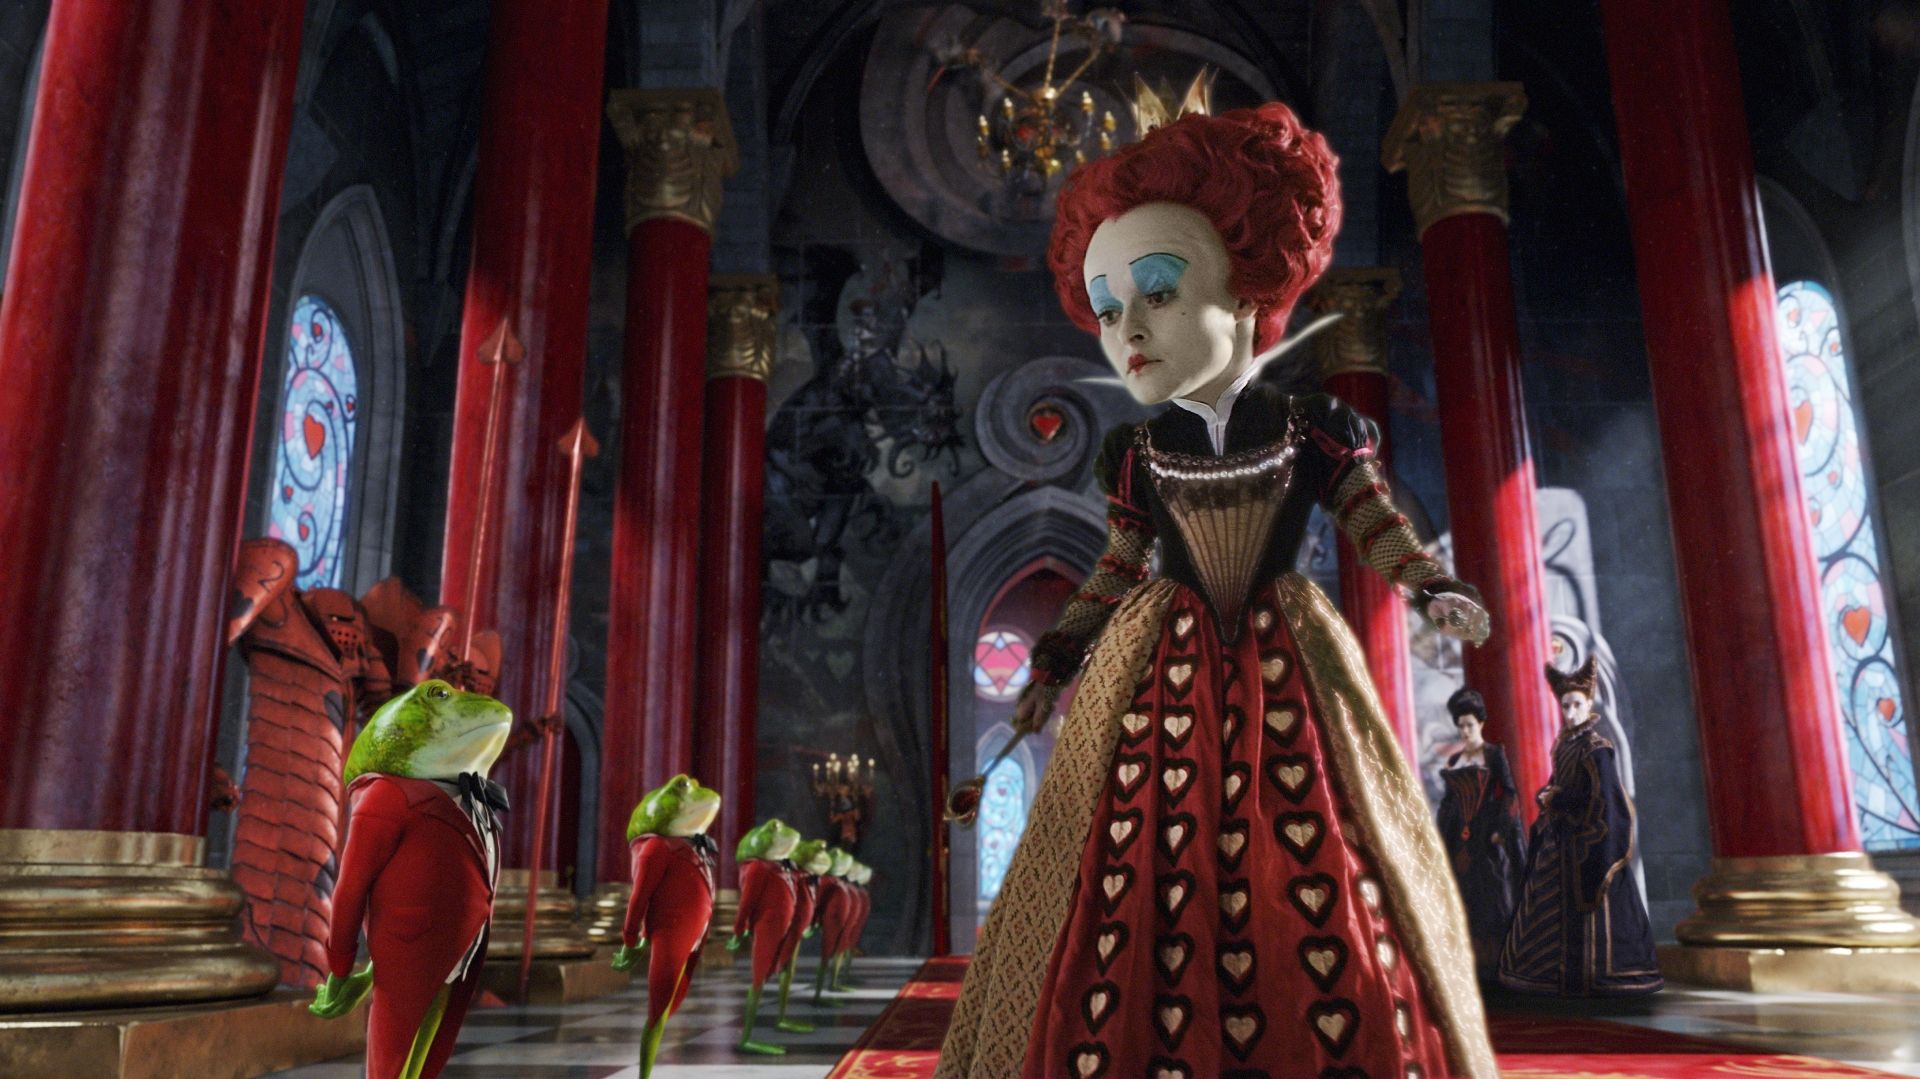 Helena Bonham Carter Discusses Being the Red Queen For Alice in Wonderland